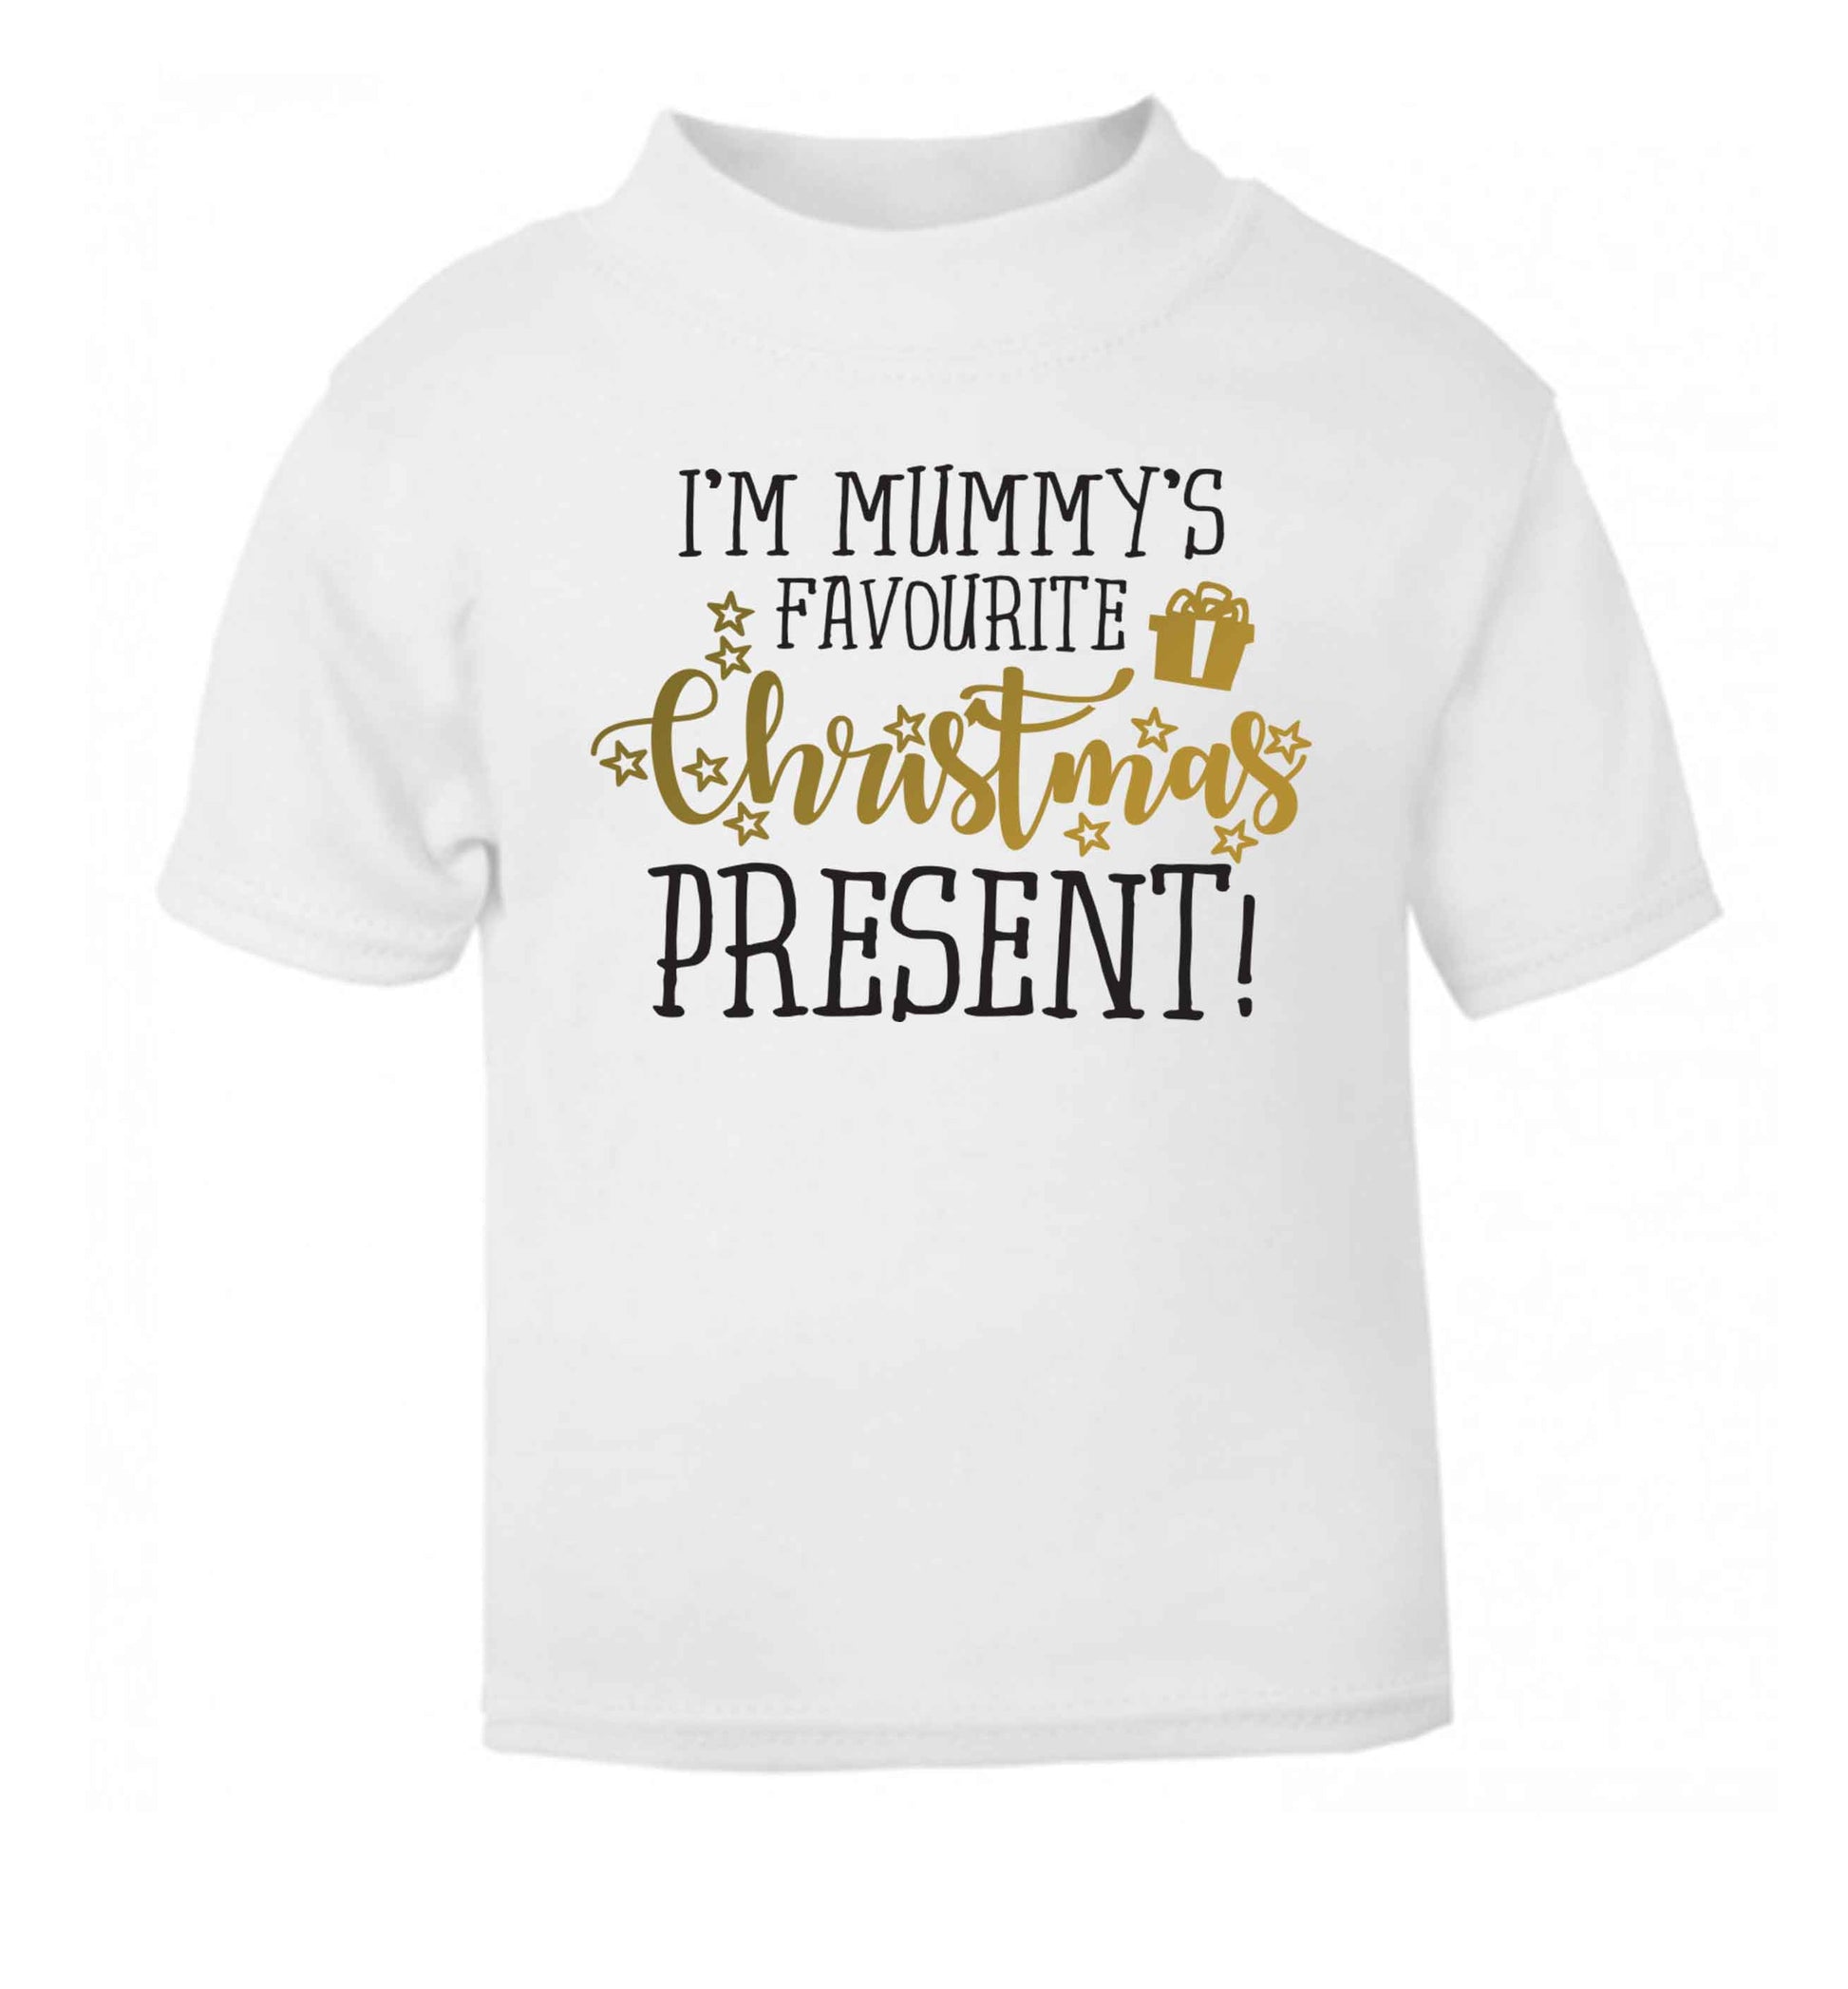 I'm Mummy's favourite Christmas present white Baby Toddler Tshirt 2 Years